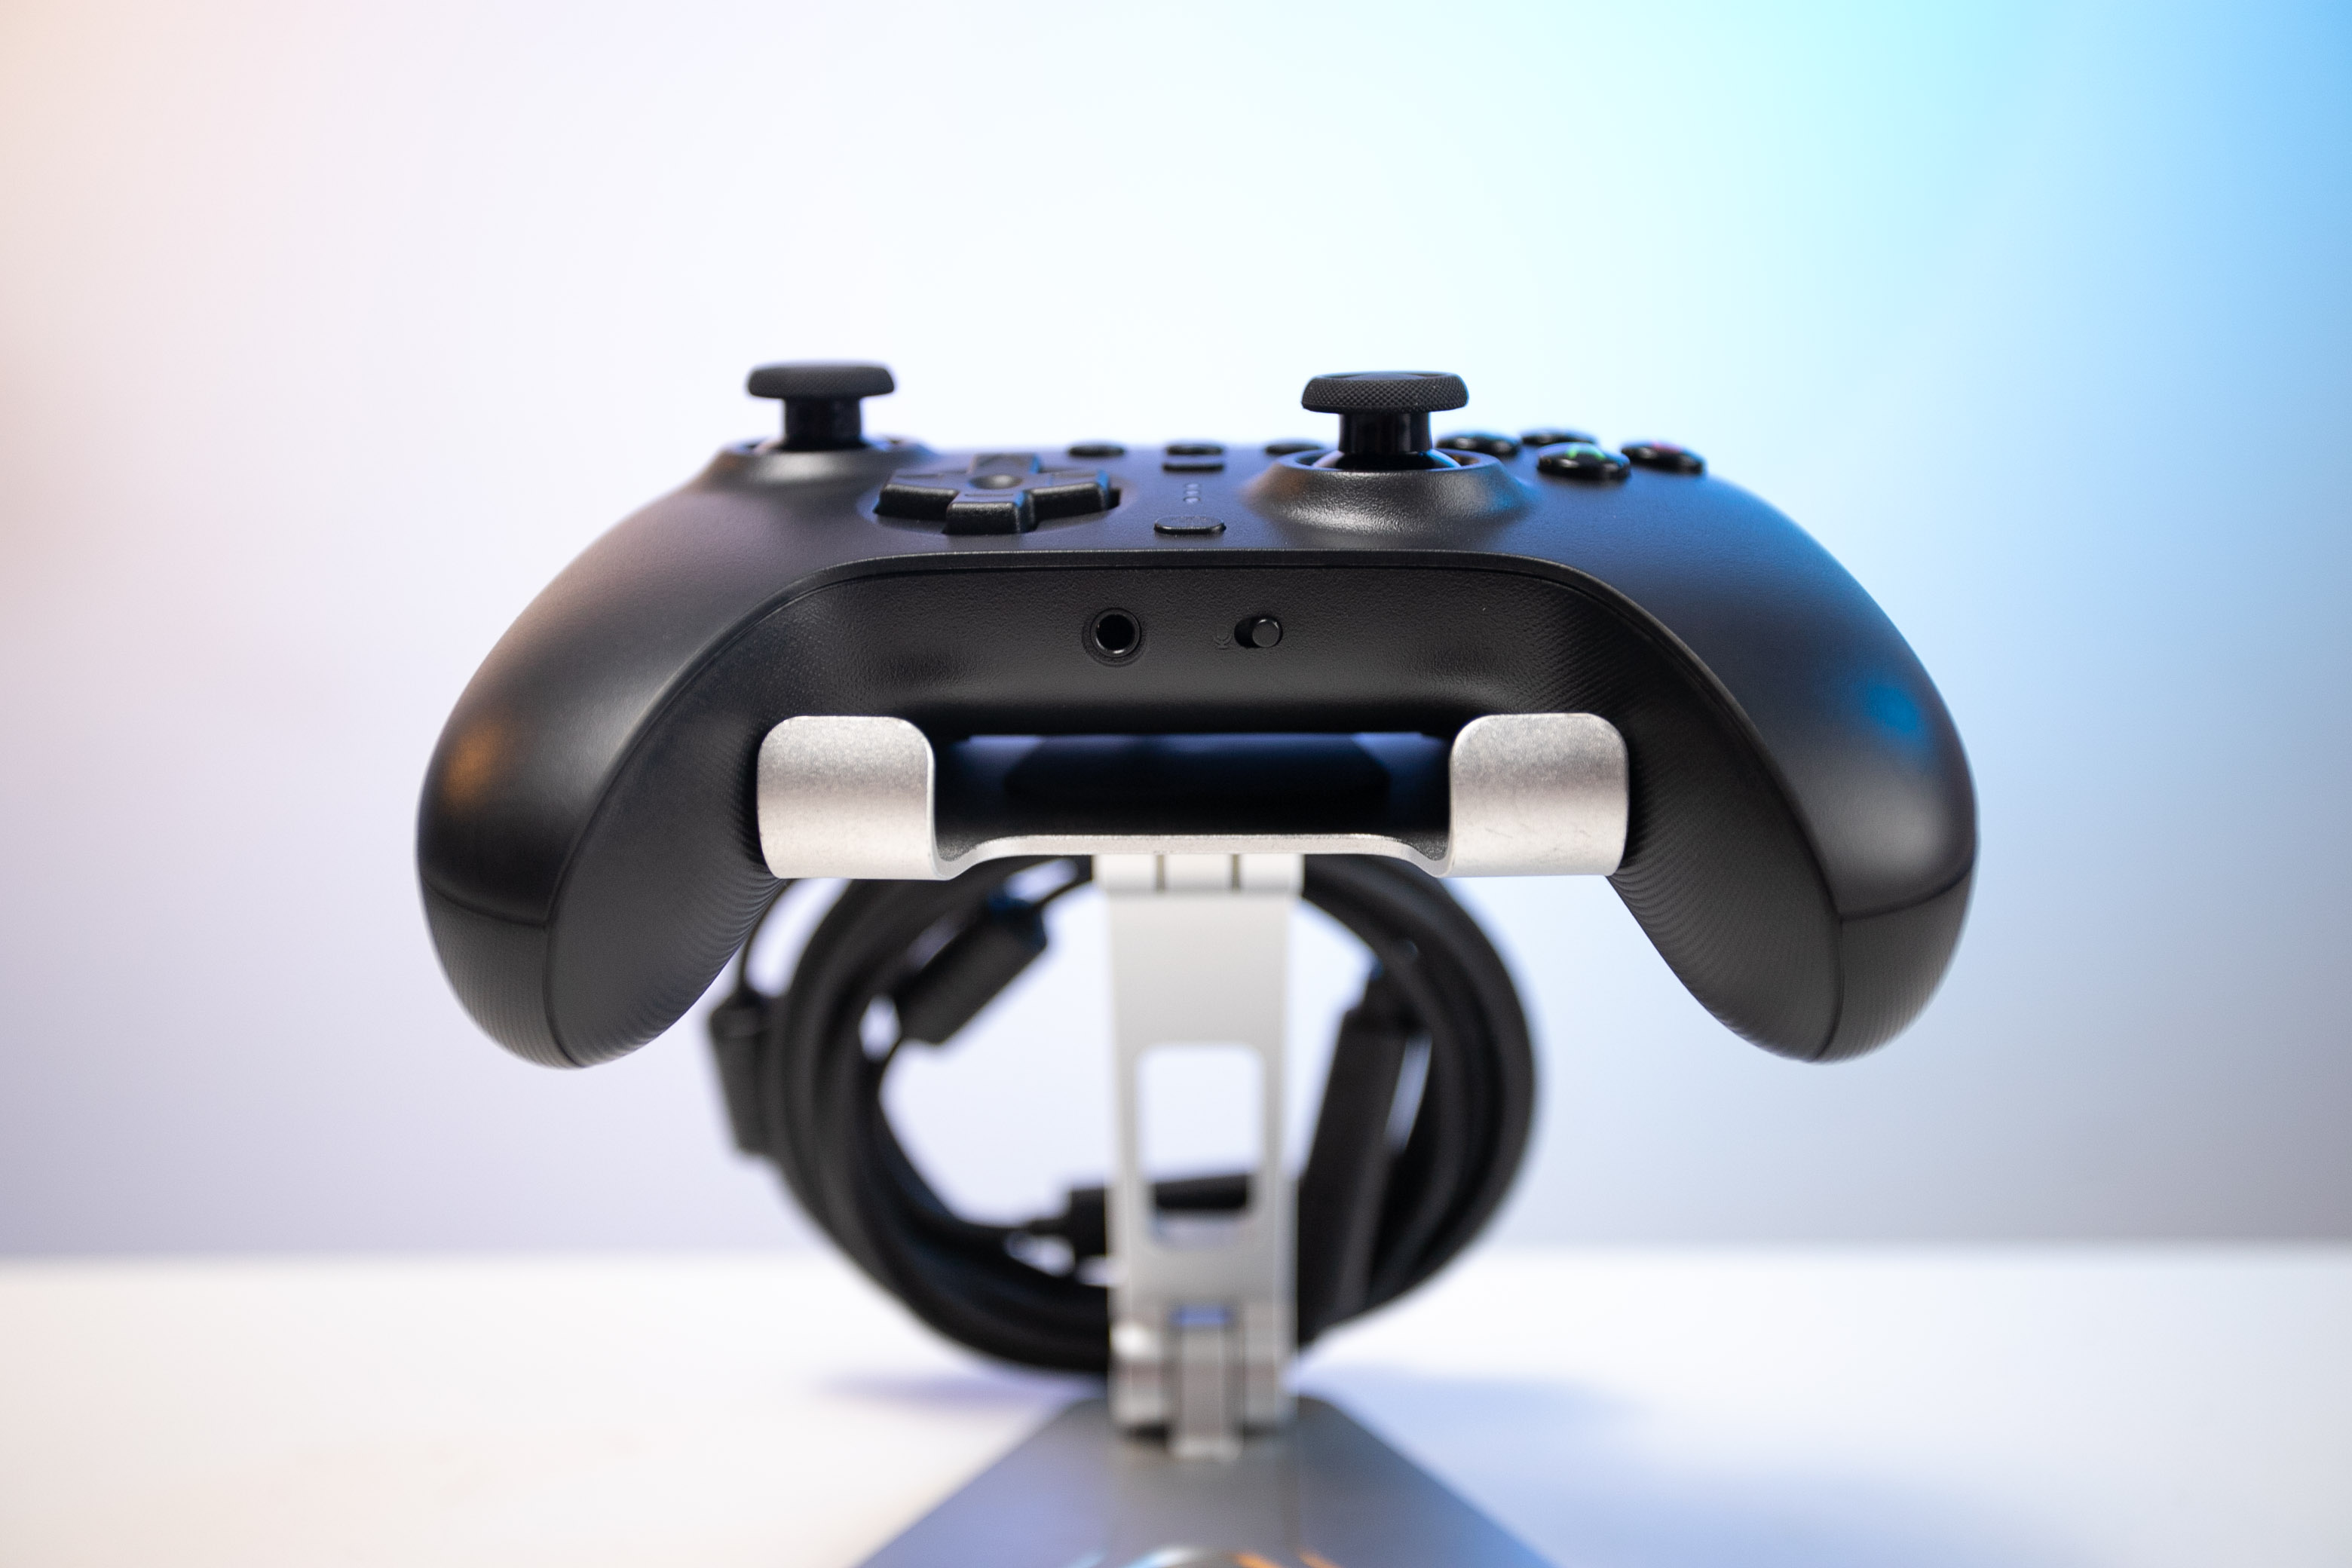 Tay cầm chơi game 8BitDo Ultimate Wired Controller cho Xbox/Windows 10/11 - màu đen